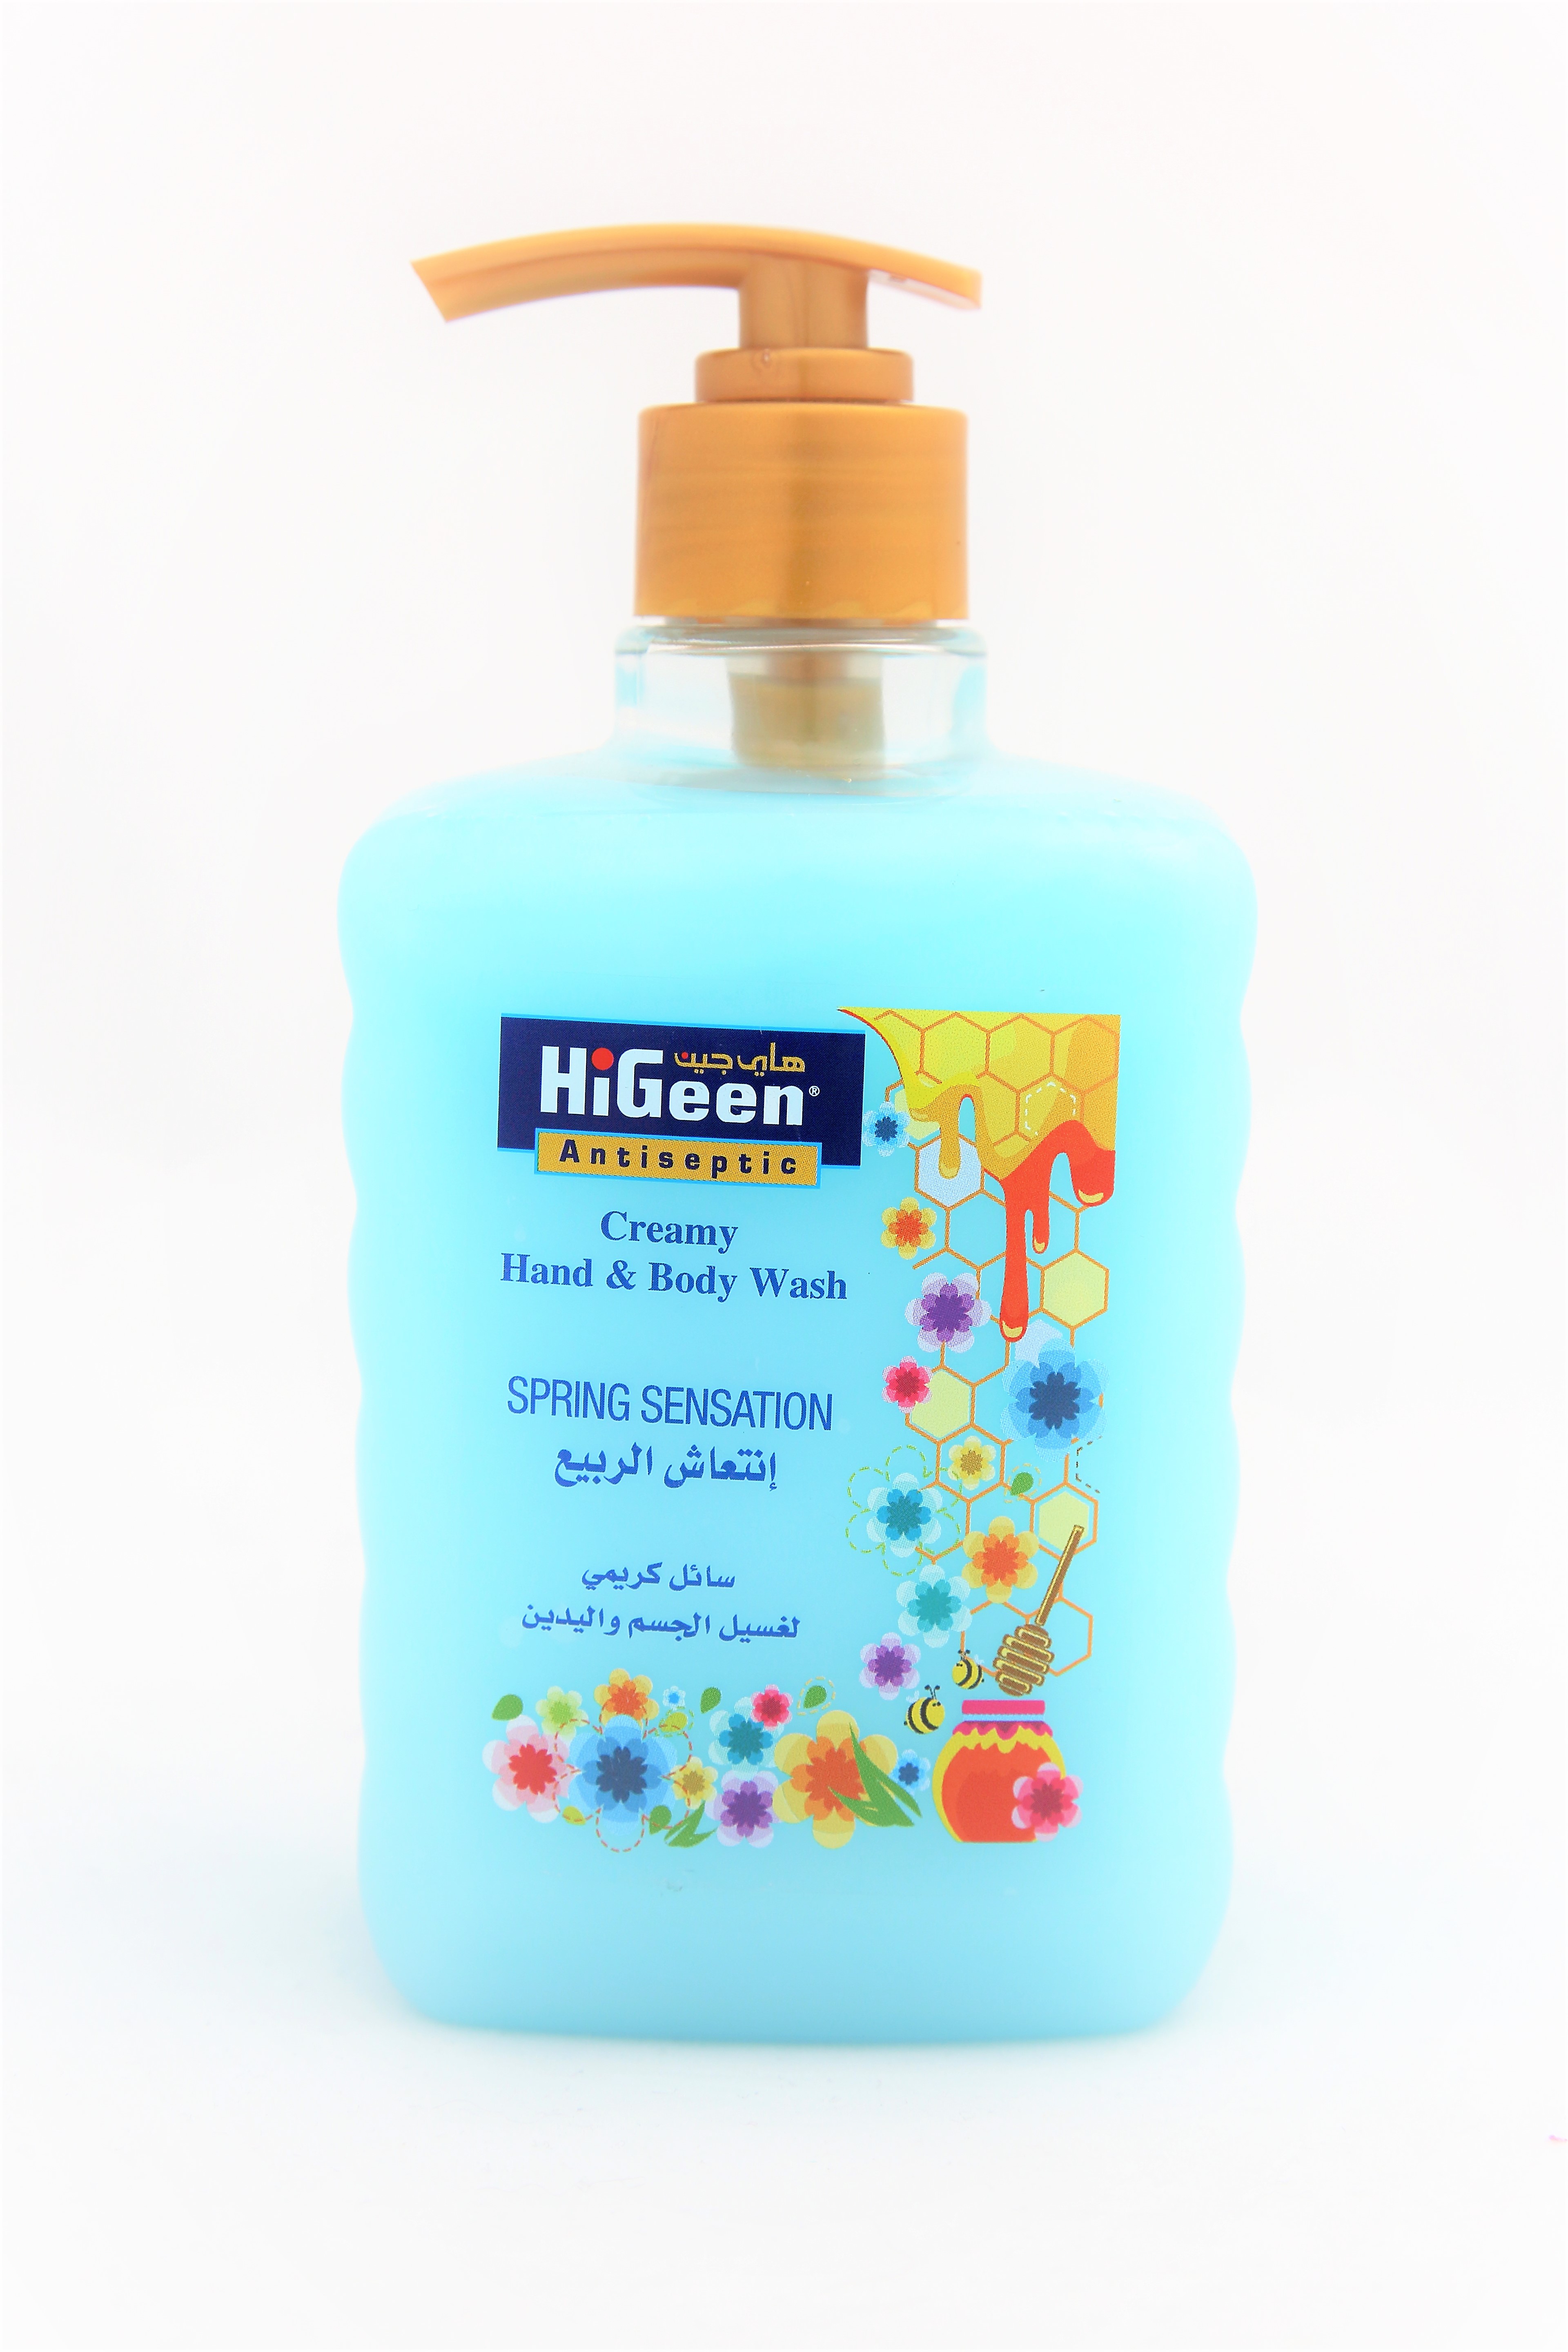 HiGeen Creamy Hand & Body Wash Spring Sensation